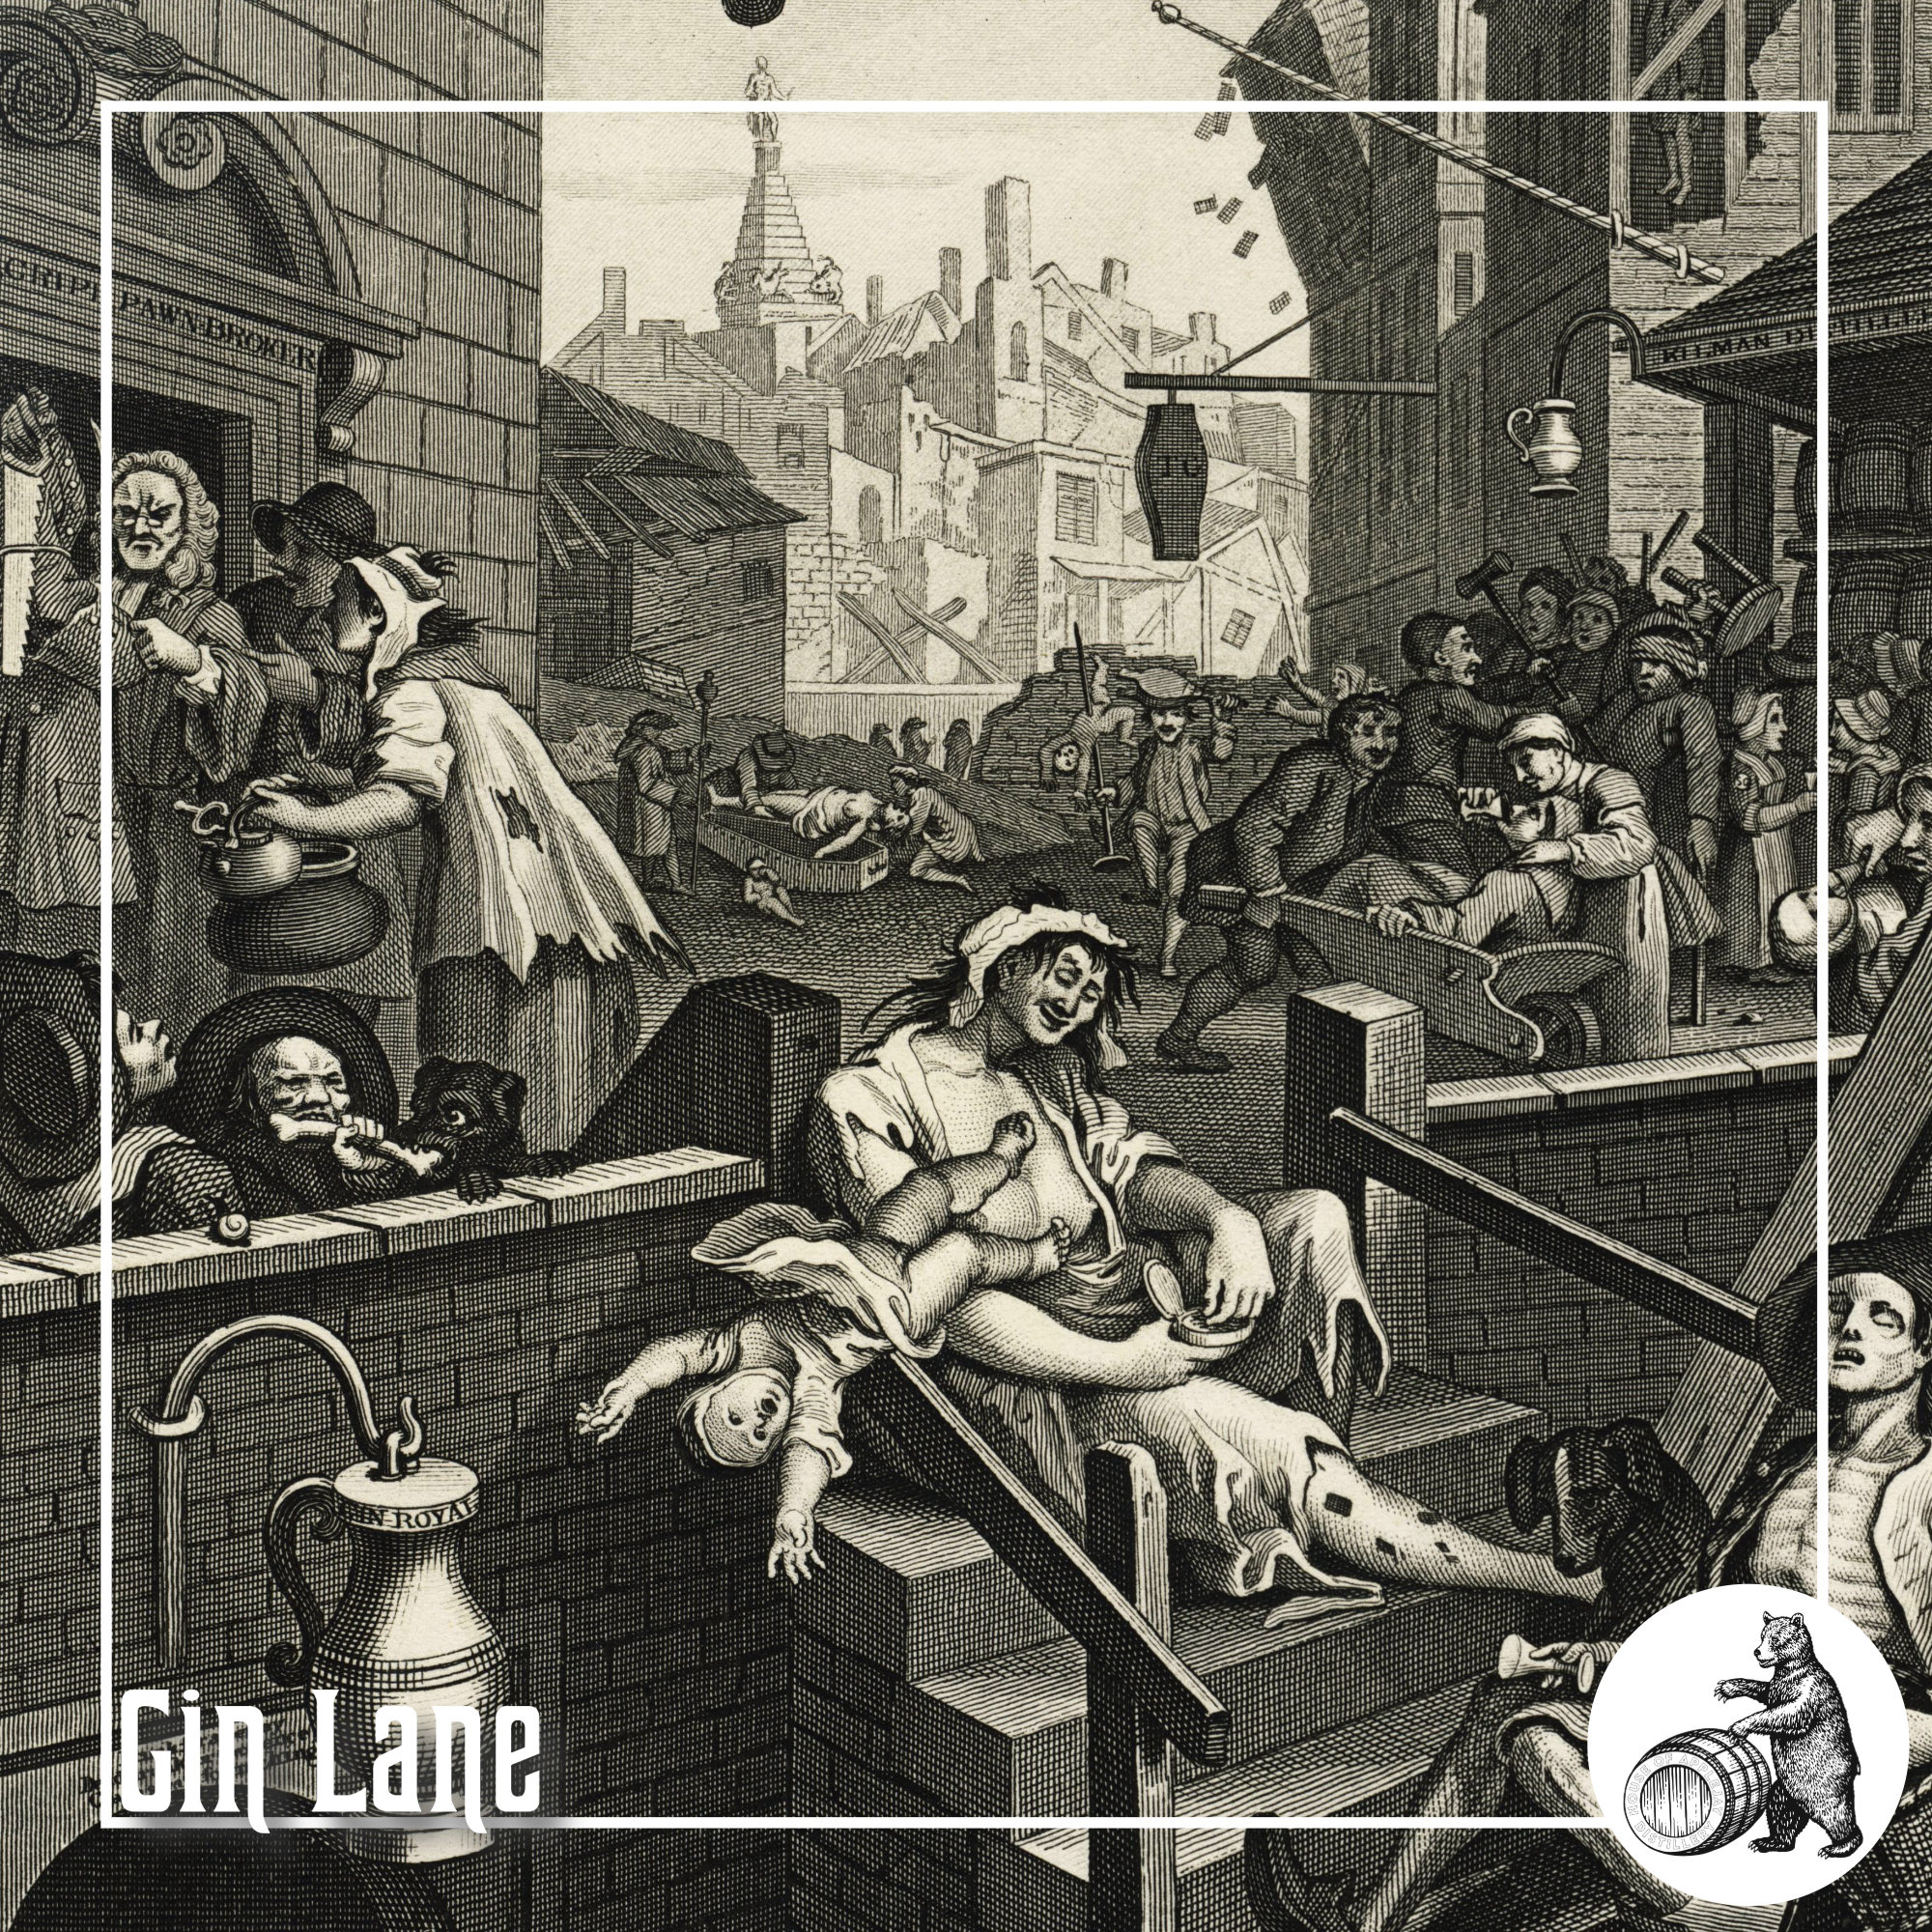 Gin Lane (c) William Hogarth, Public domain, via Wikimedia Commons